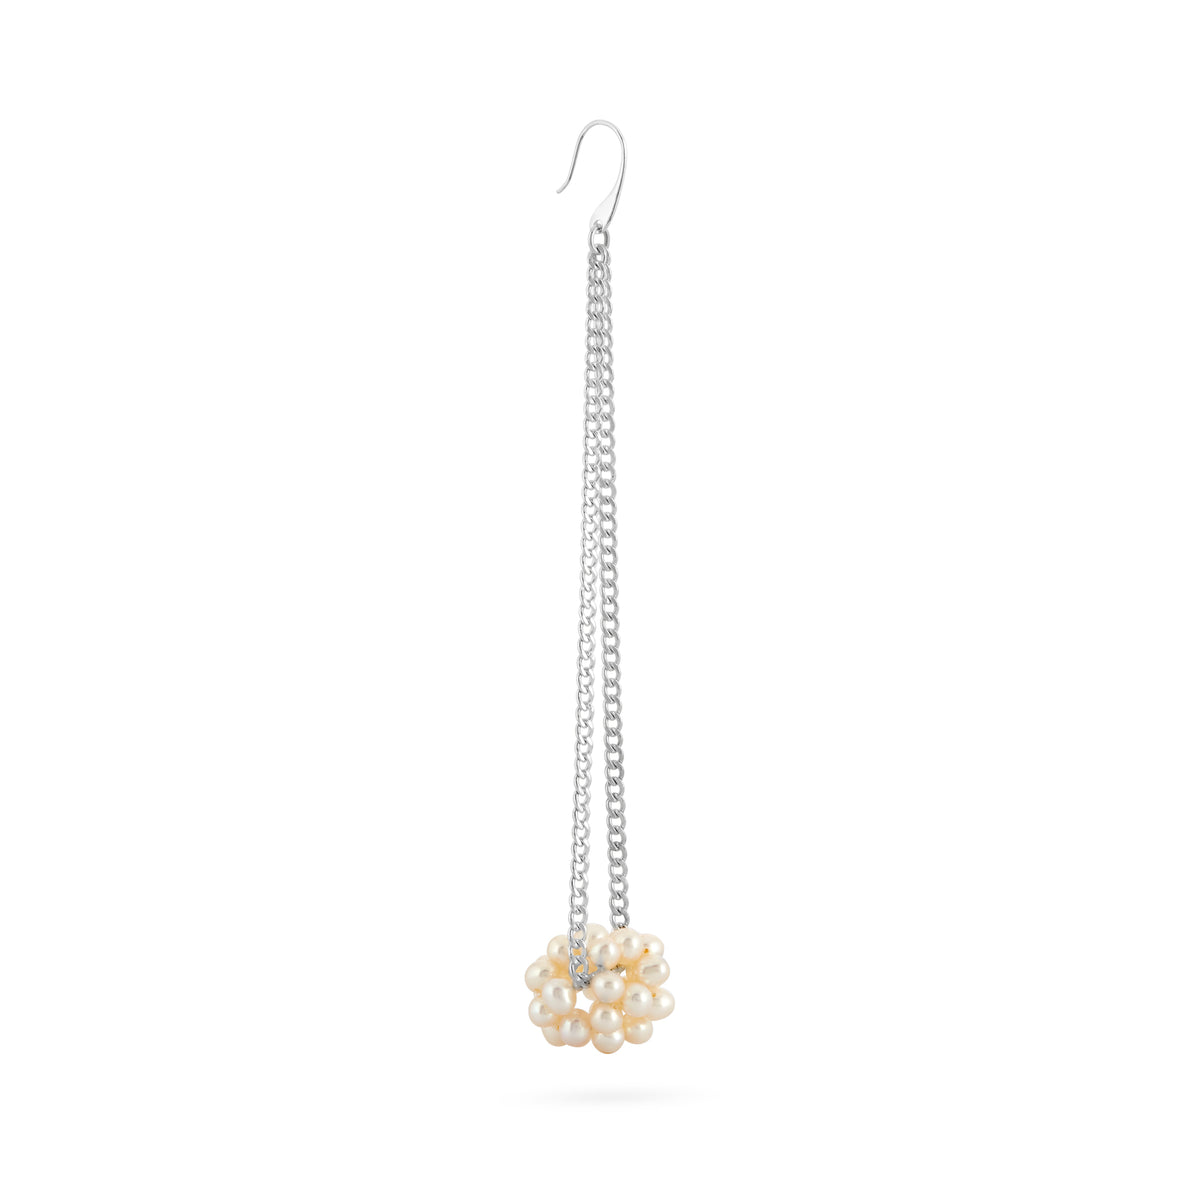 VIKA jewels pearls pearl Perle Ohrring Earring chain handmade statement sustainable ethical bali berlin nachhaltig